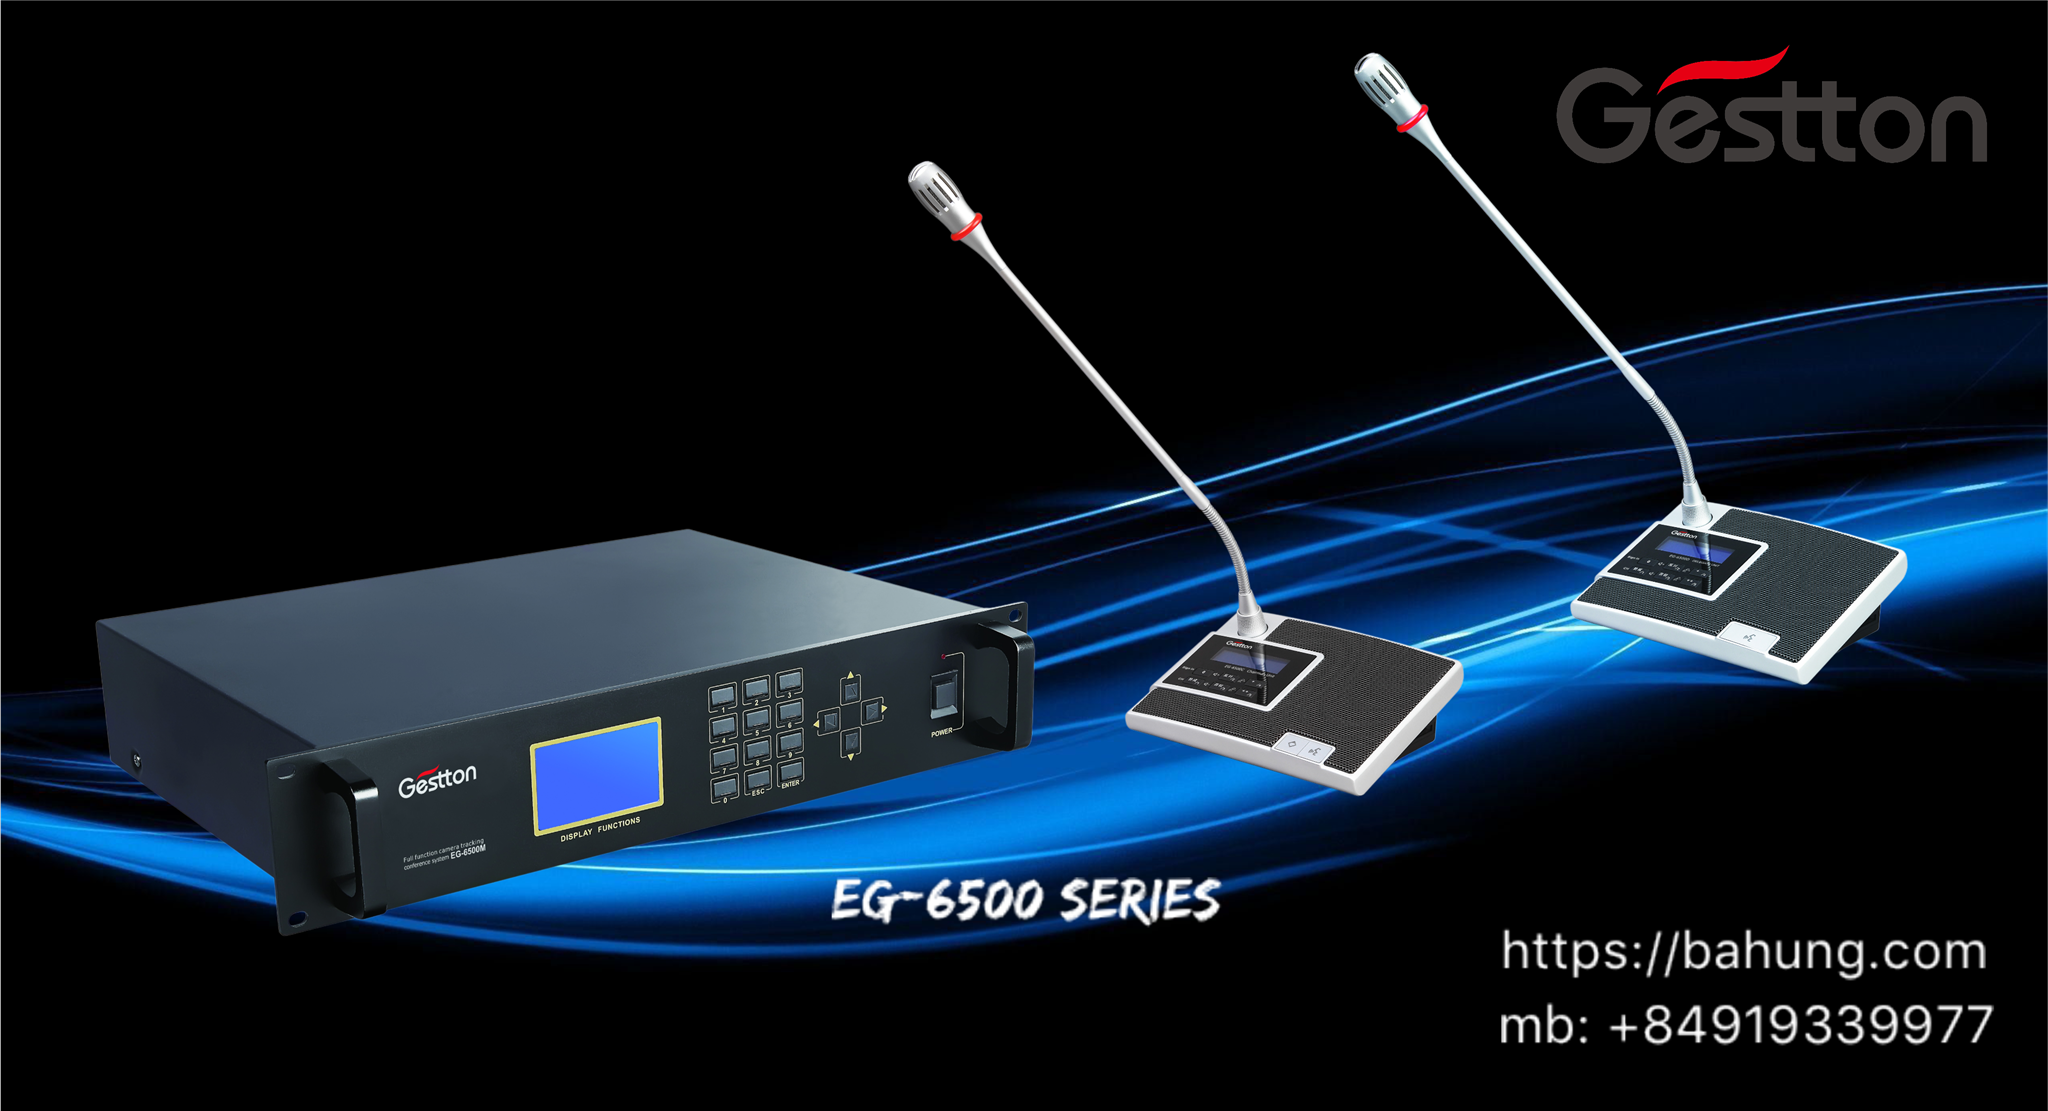 Conference Gestton - EG-6500